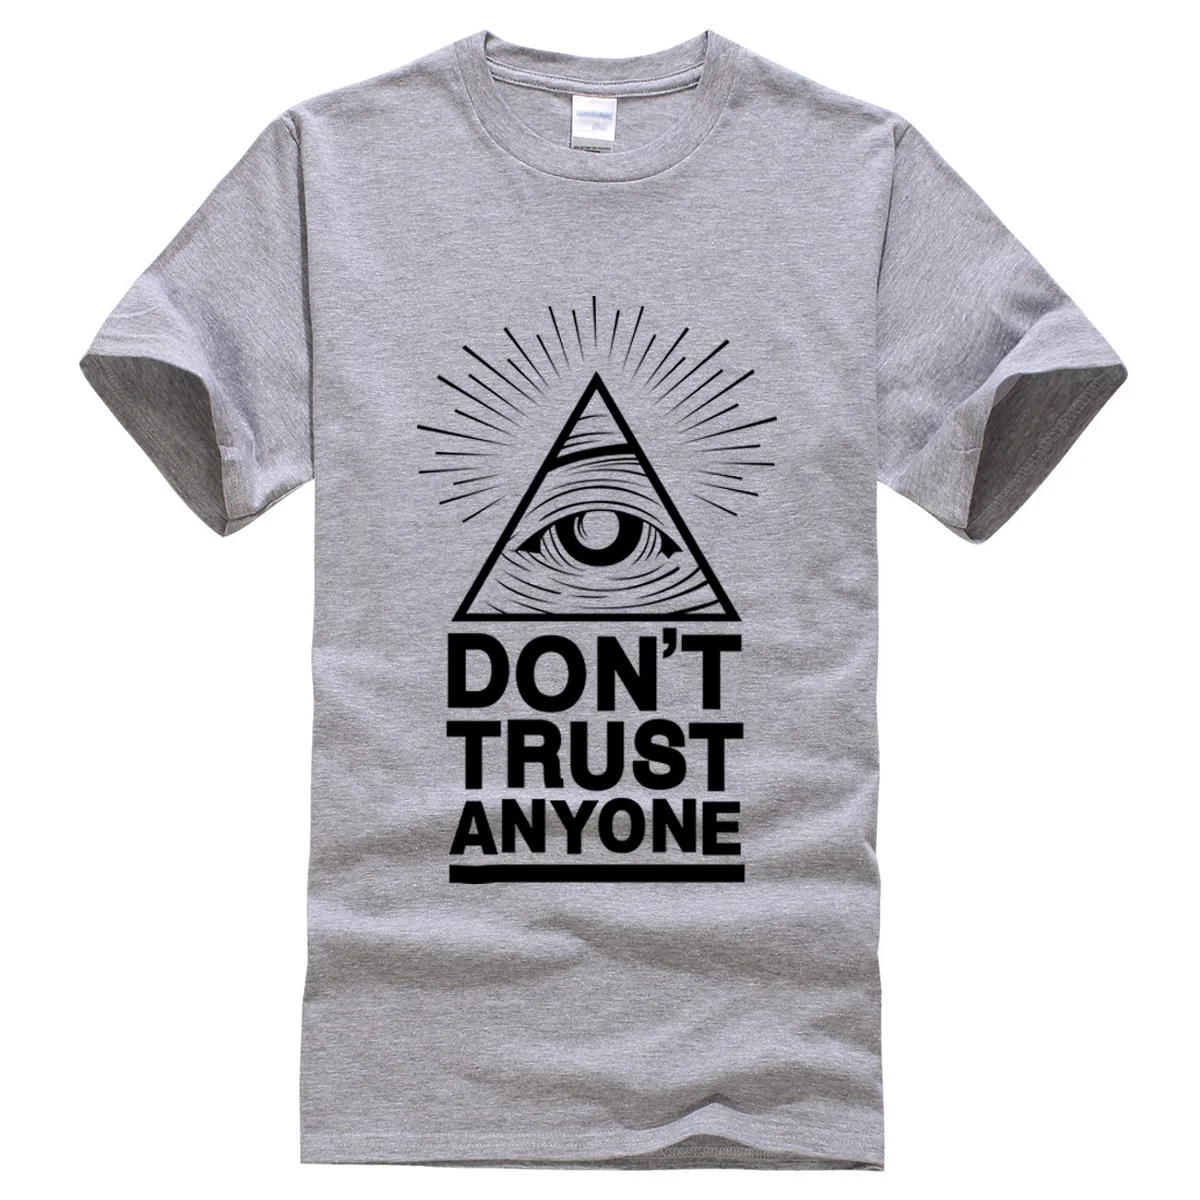 Лето, новинка, мужские футболки, Dont Trust Anyone Illuminati All Seeing Eye, футболка с буквенным принтом, Мужская футболка, повседневные топы, футболки - Цвет: gray1